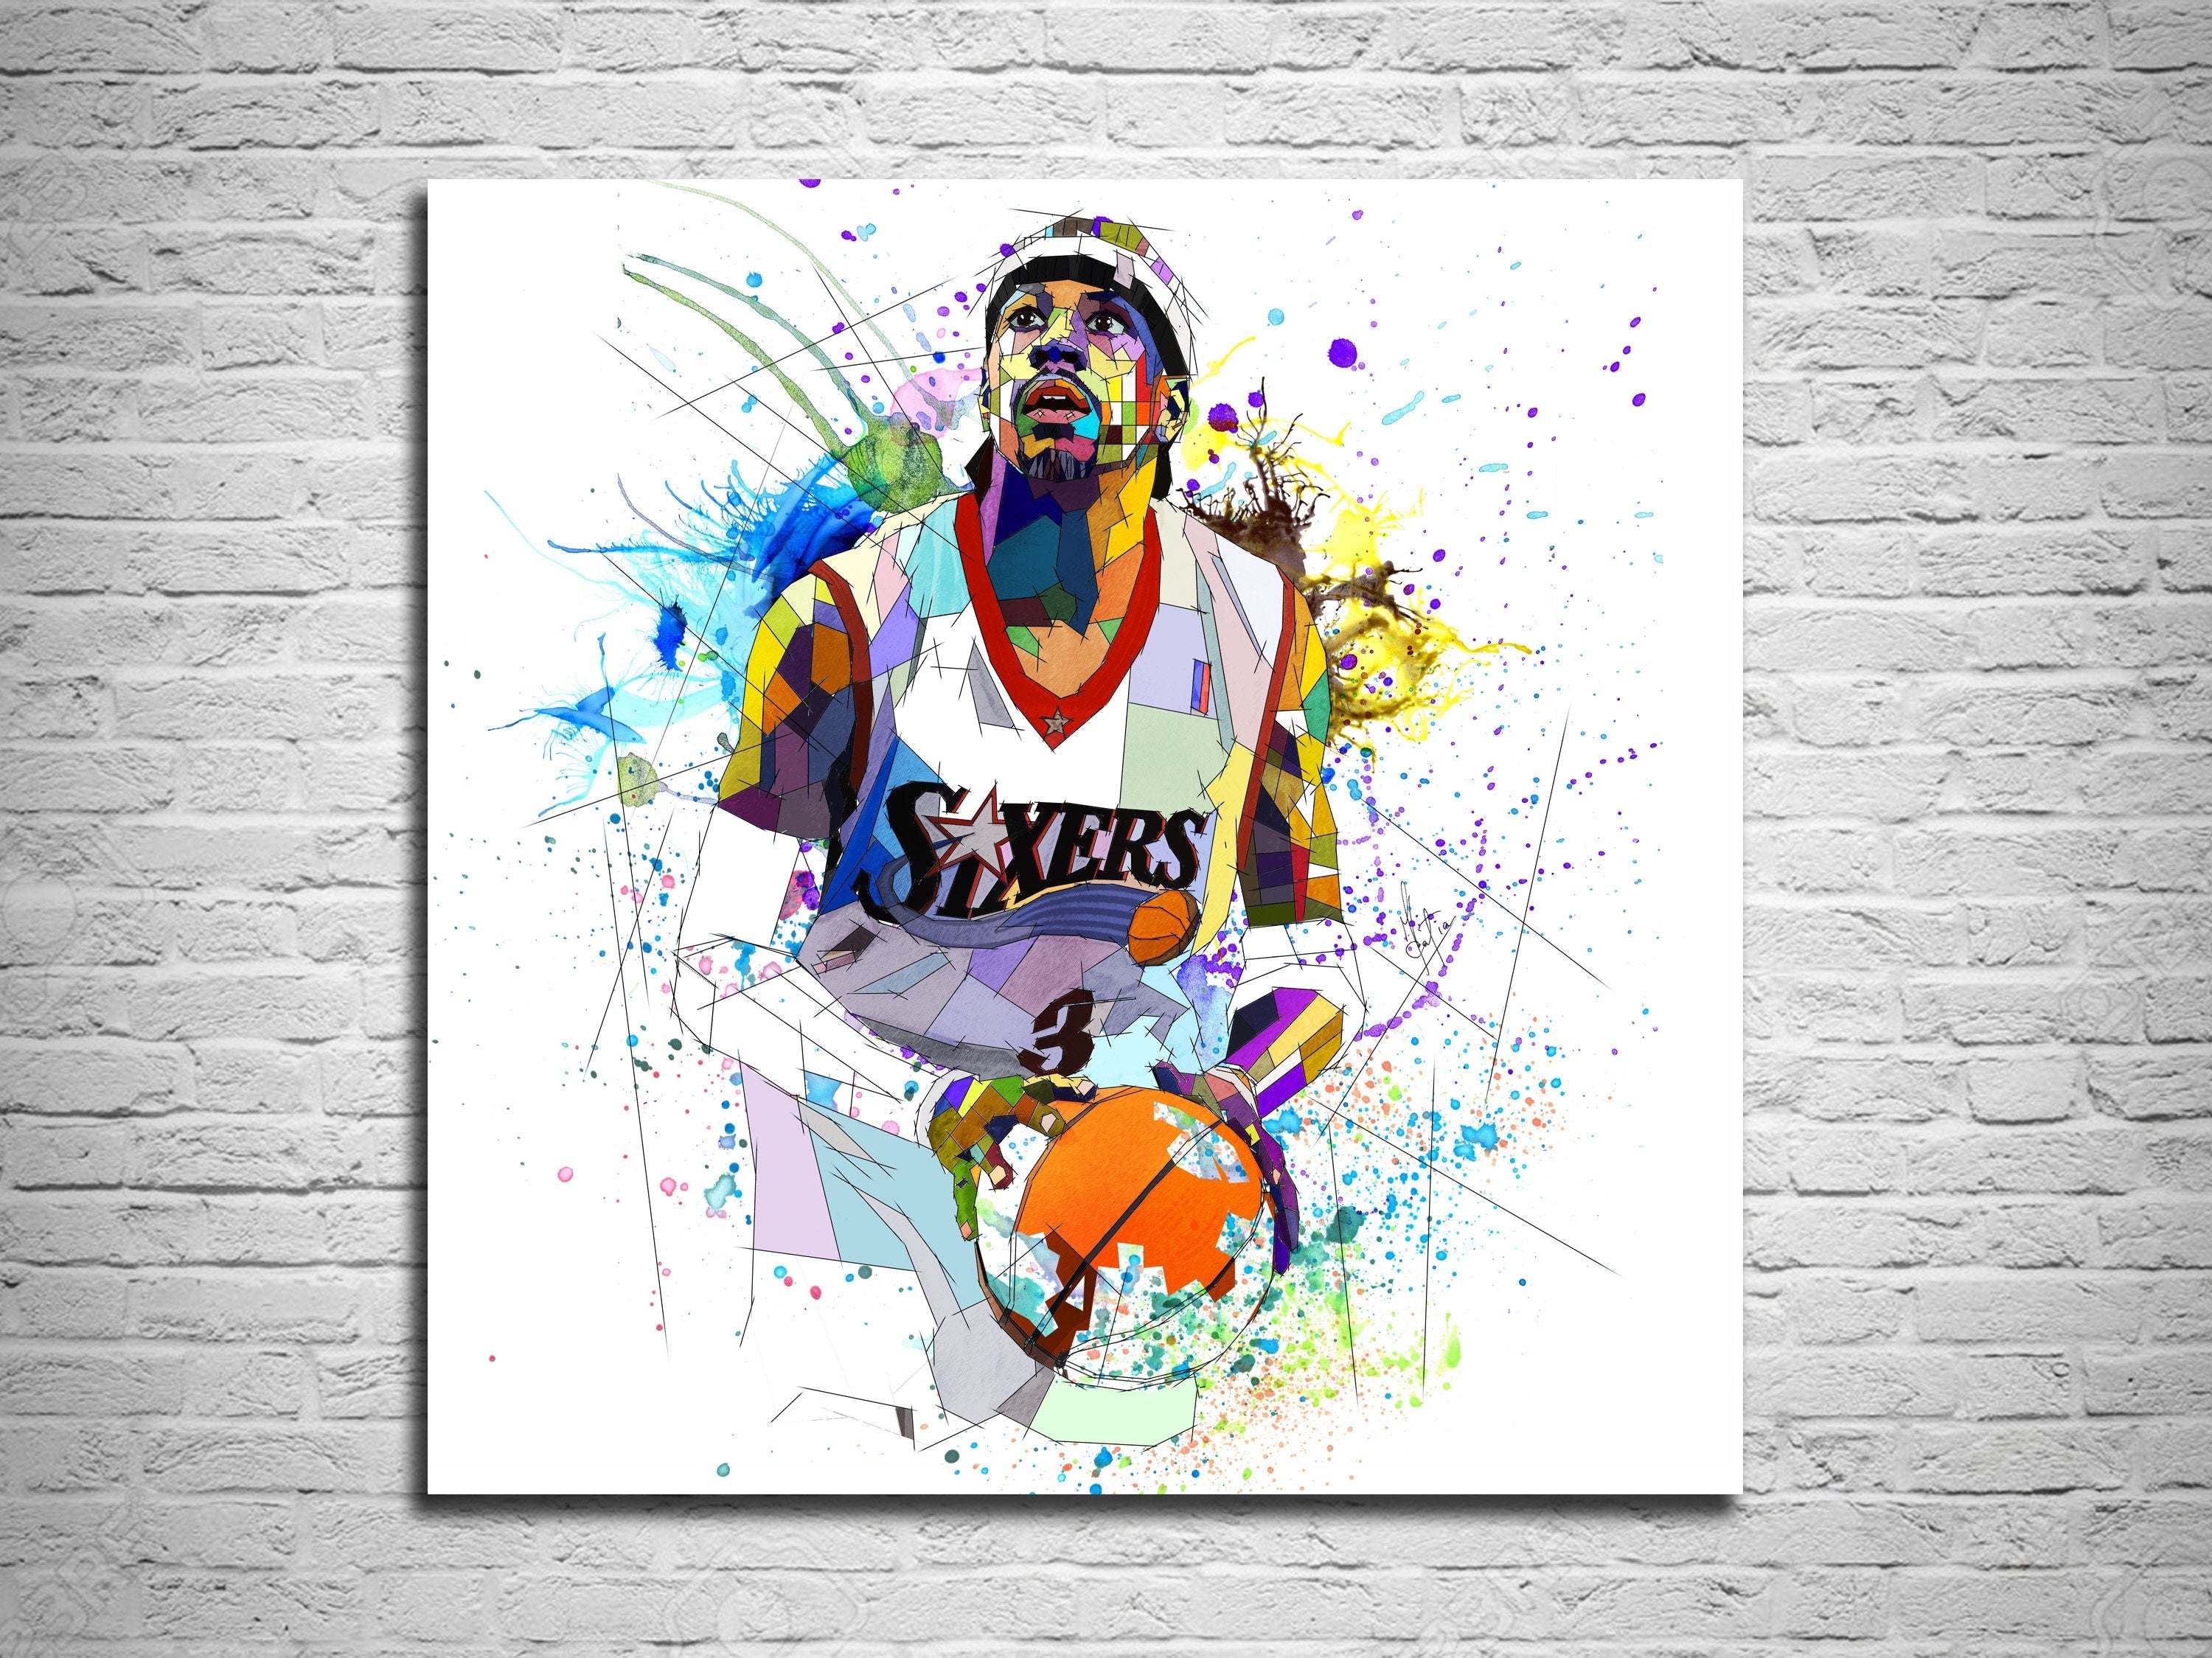 Wall Decor Master Allen Iverson VS Kobe Art Cloth Basketball Poster Print  Room Decoration 20x30Inch